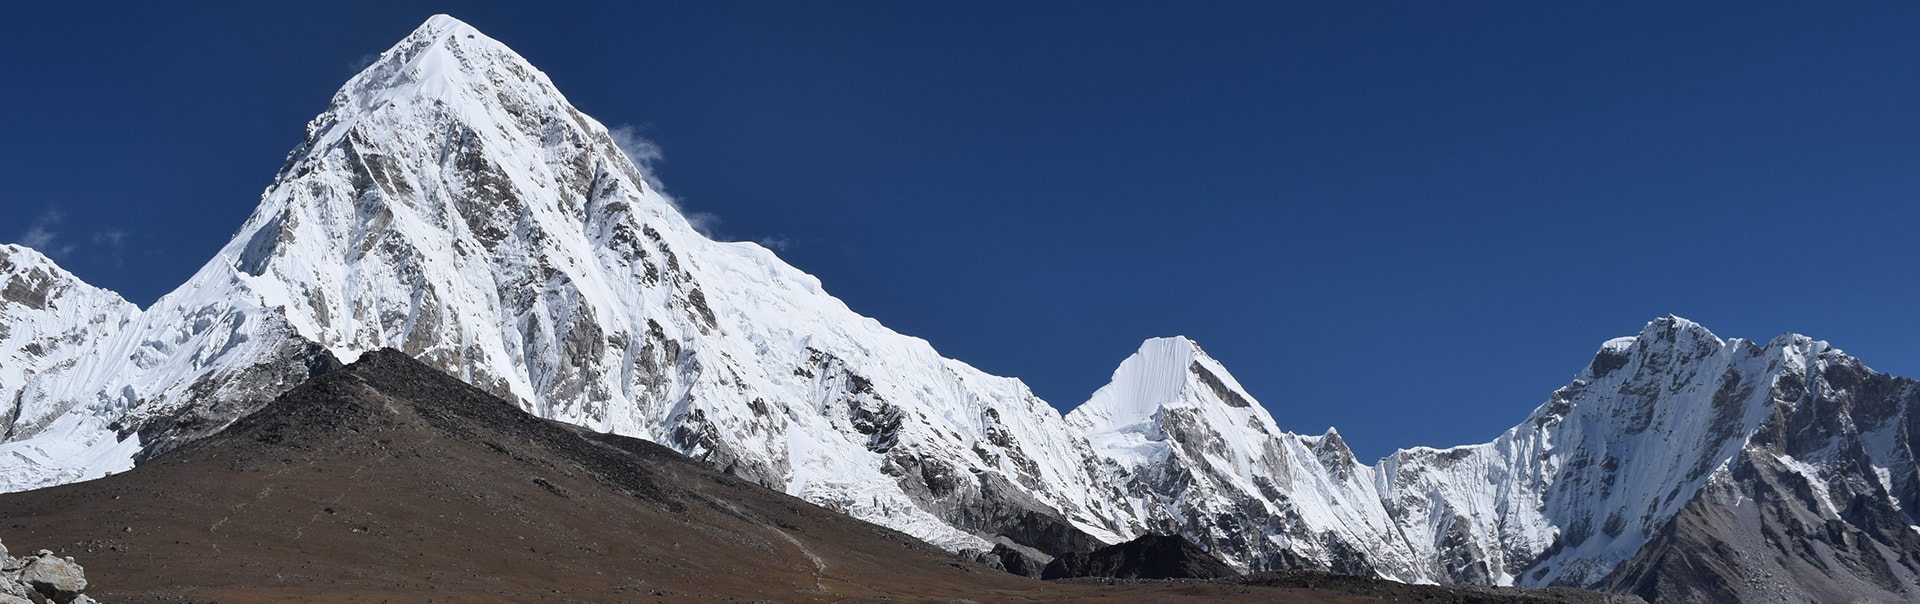 Everest Three Passes Trek, Everest Base Camp with 3 high passes Renjo La, Gokyo Lake, Cho La and Kongma La